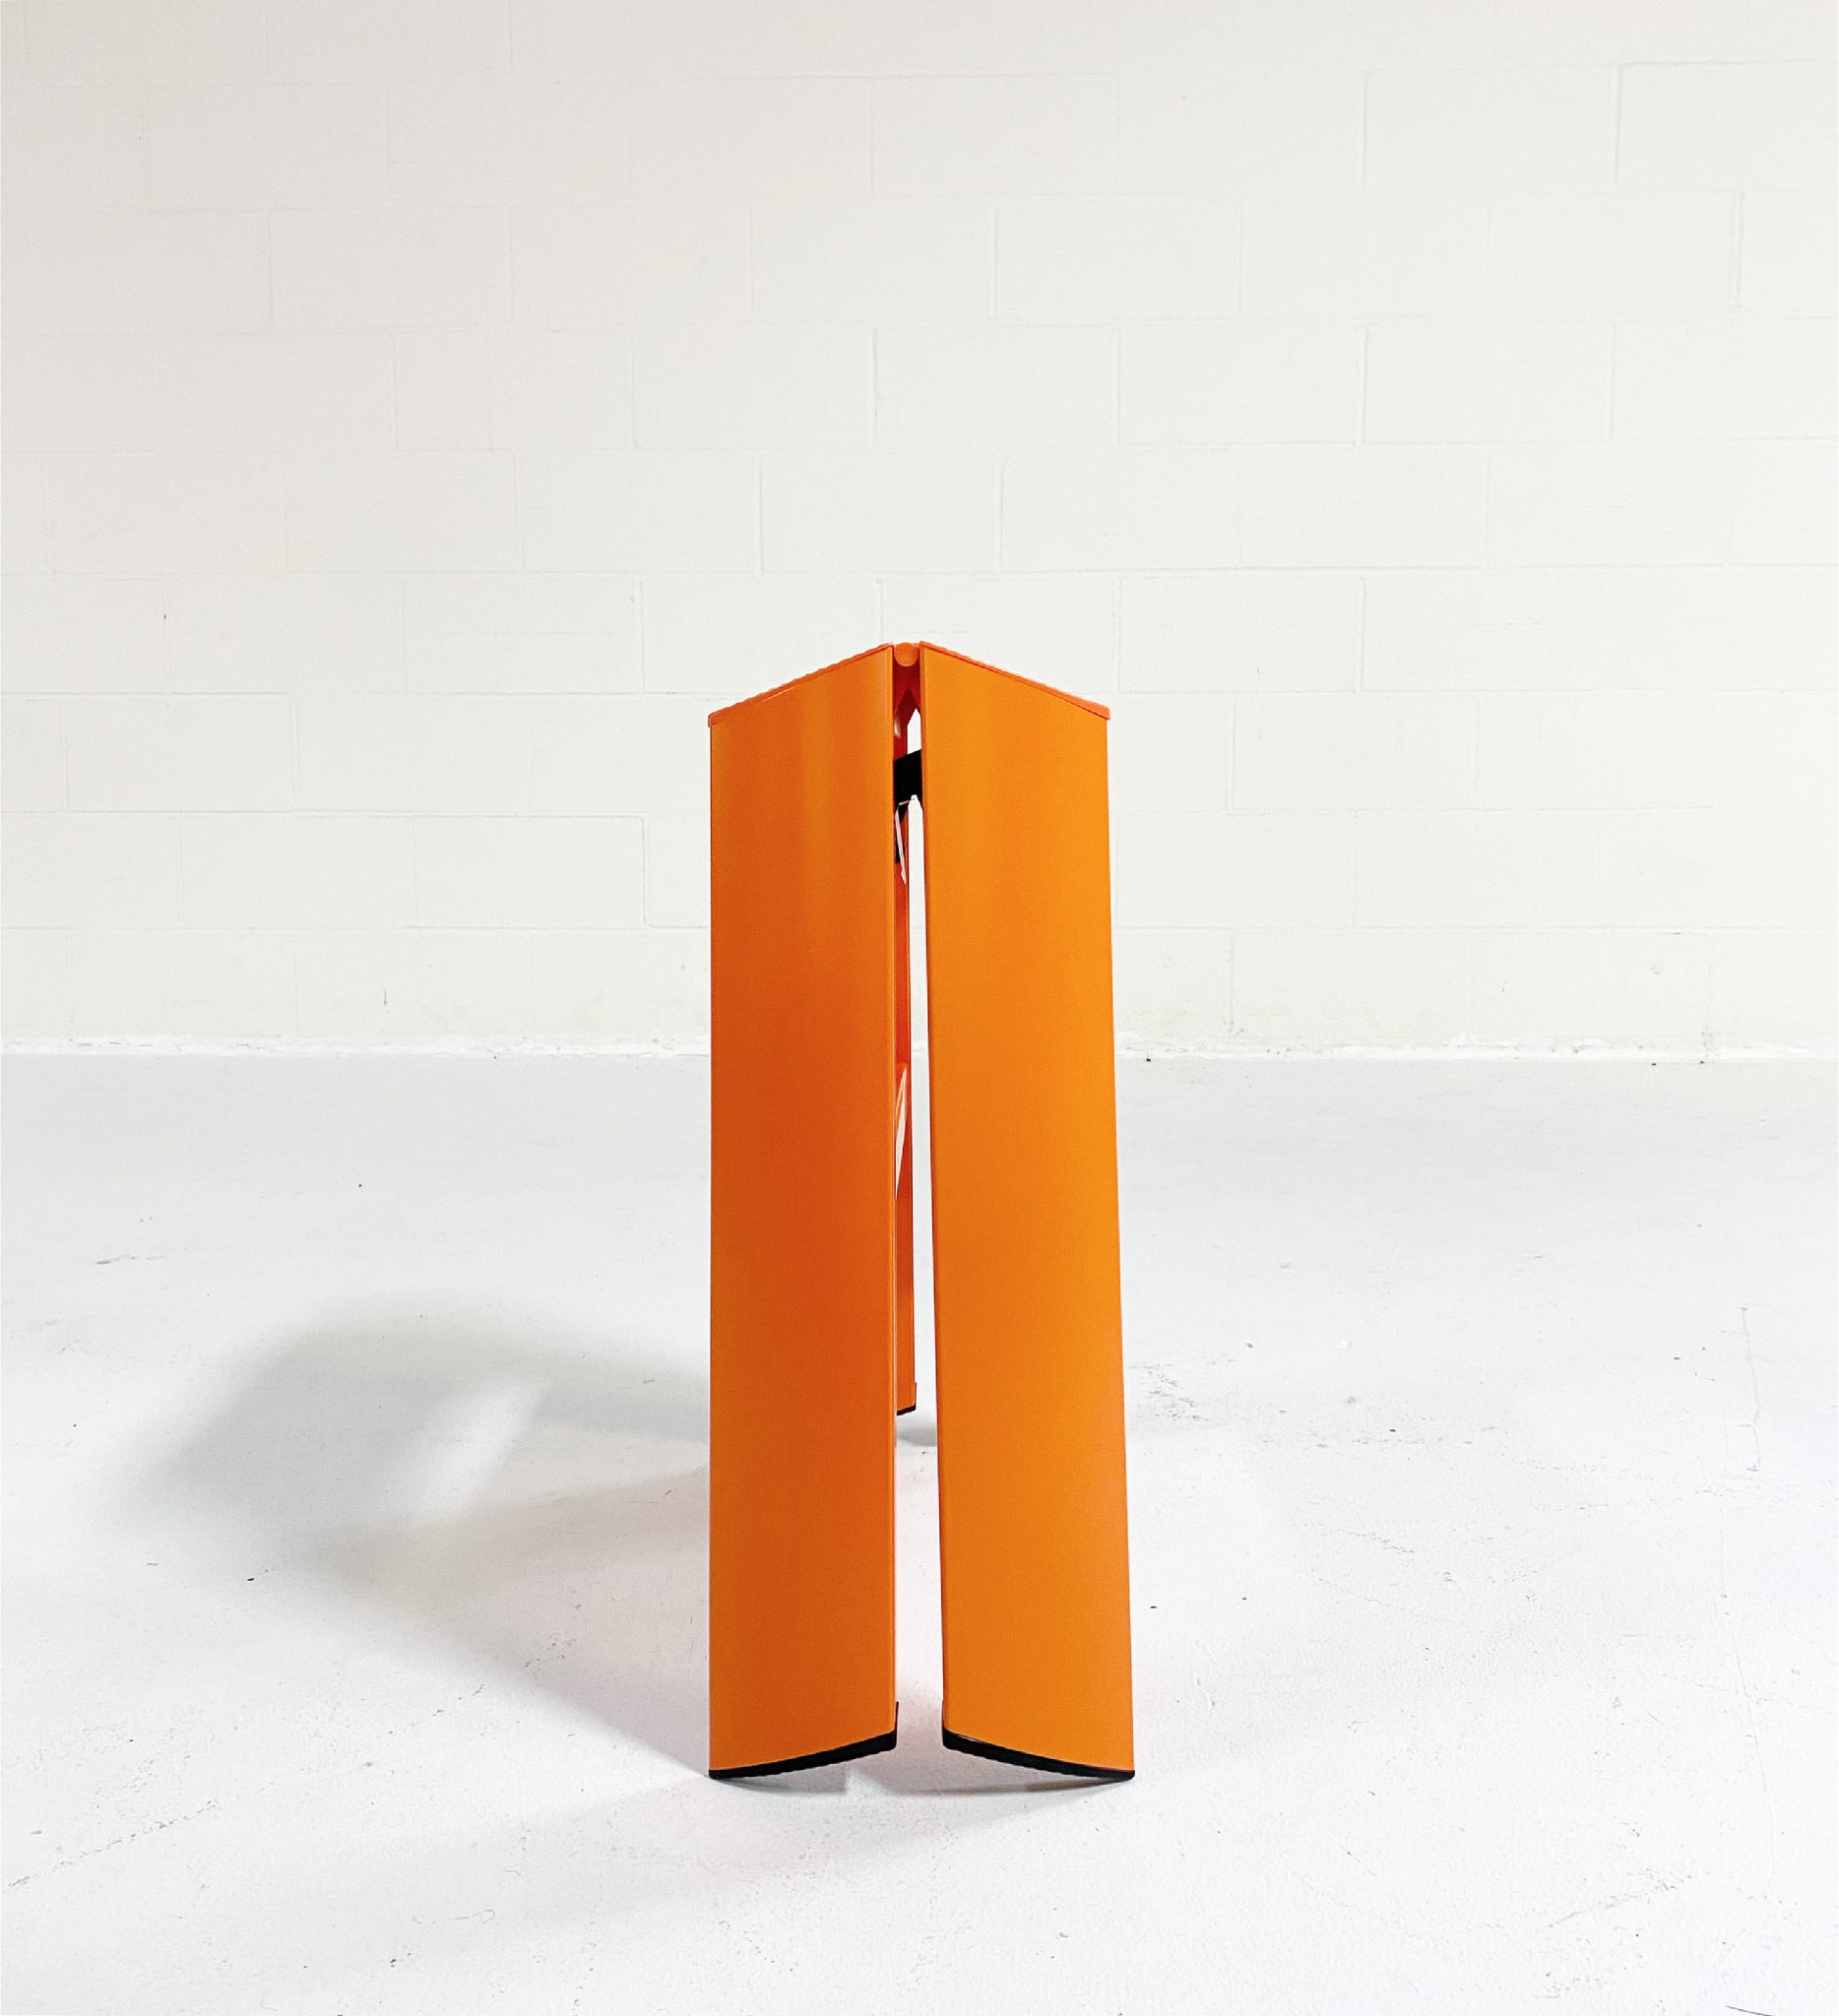 Lucano Wide 2-Step Ladder - Orange